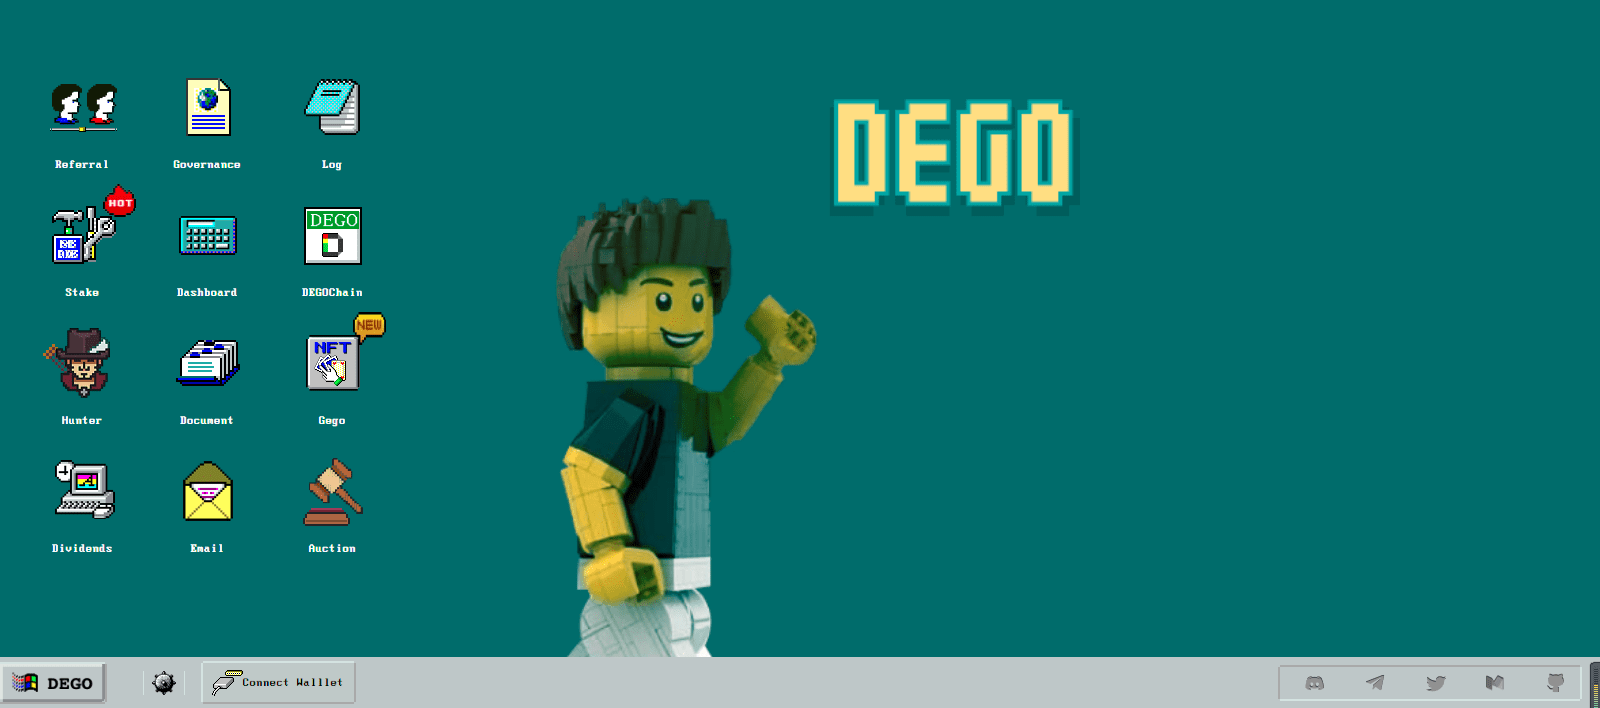 DEGO项目简介：以乐高的形式搭建DeFi世界